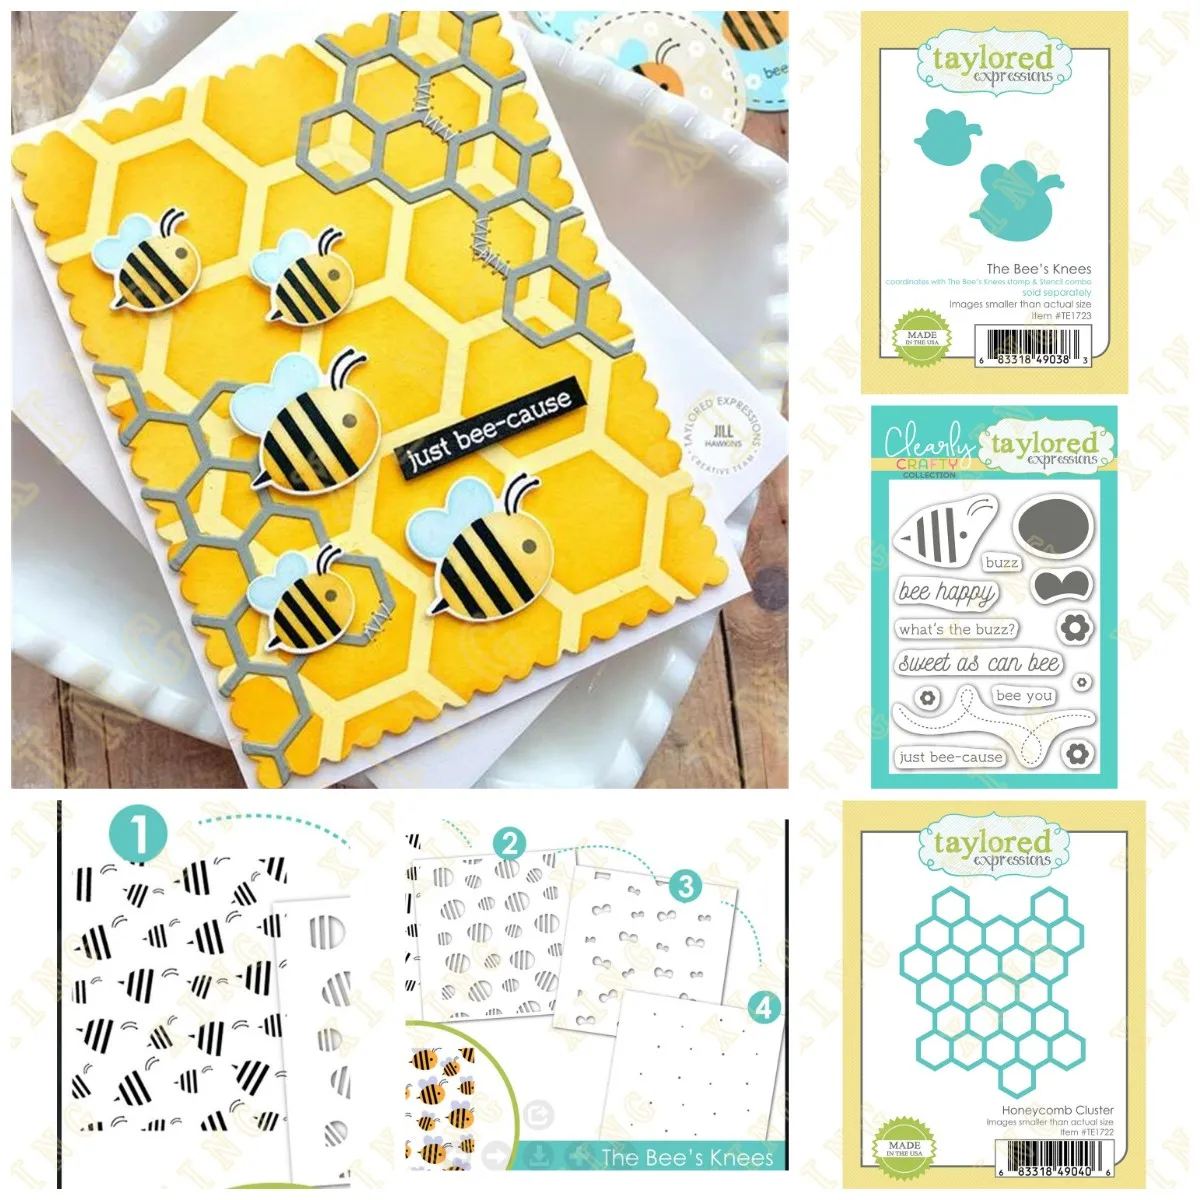 

Bee Buzz Happy Sweet Hexagon Metal Cutting Dies Stamps Diy Scrapbooking Card Stencil Paper Cards Handmade Album Stamp Die Sheets